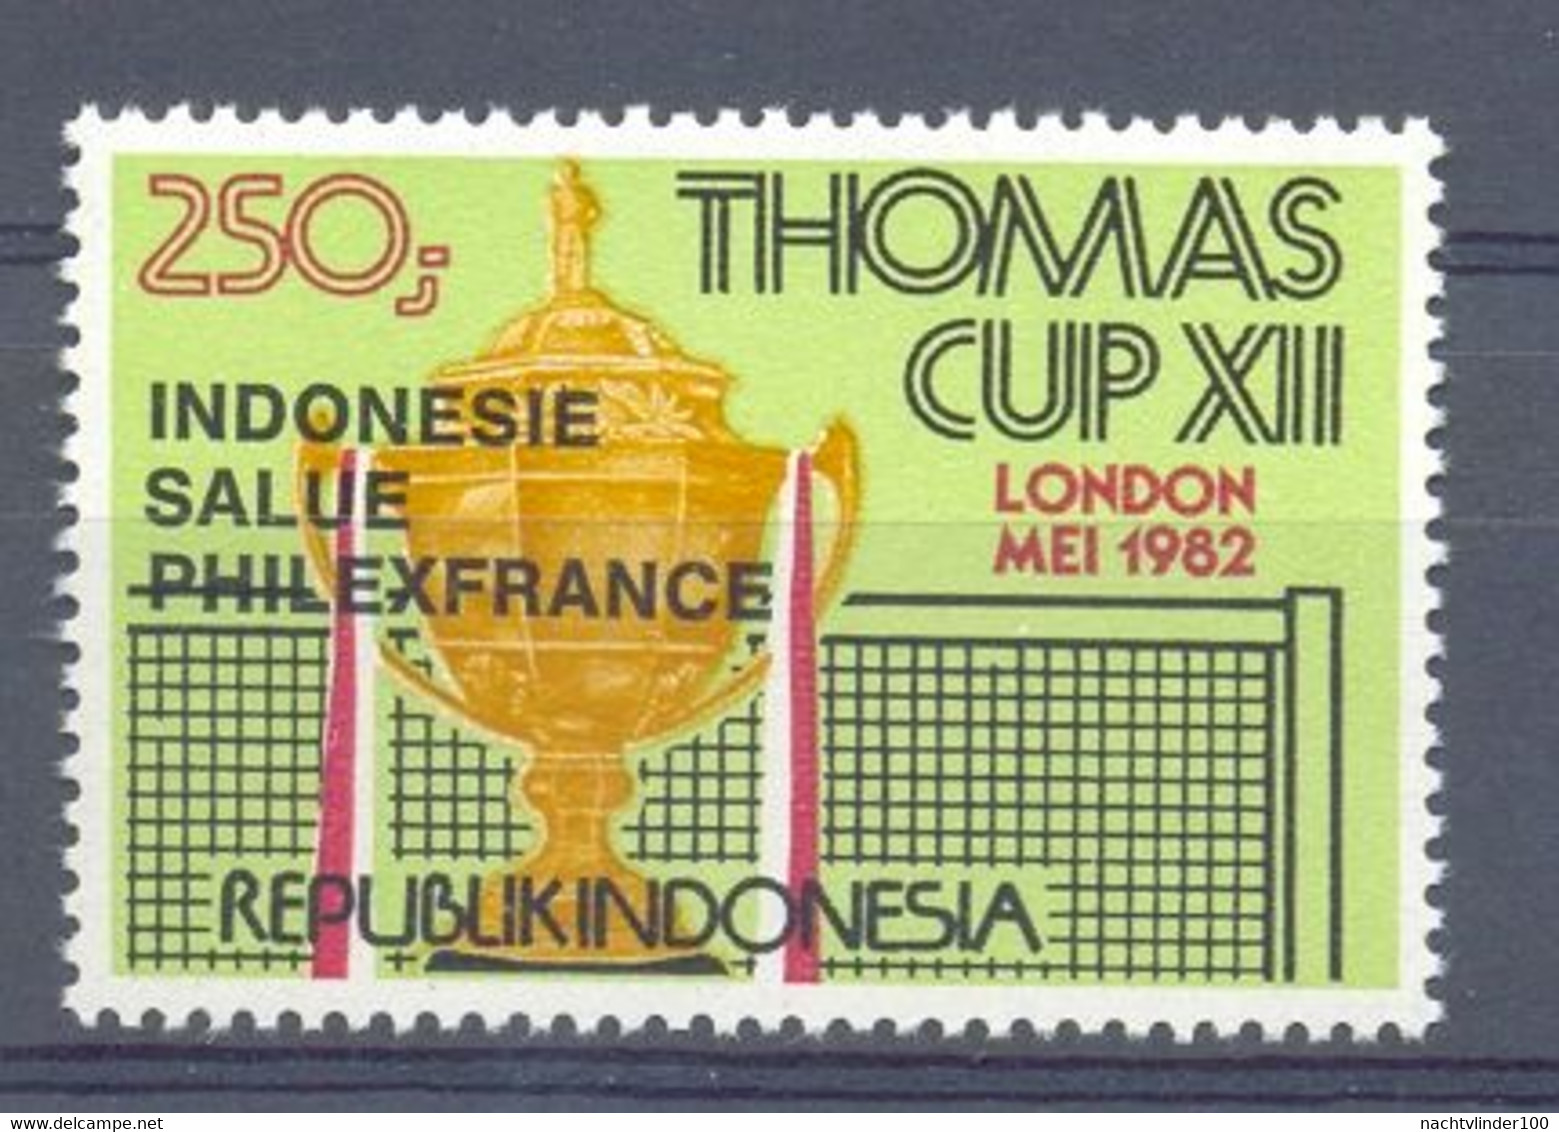 Mgm1114 THOMAS CUP BADMINTON OVERPRINT BLACK INDONESIA 1982 PF/MNH - Bádminton